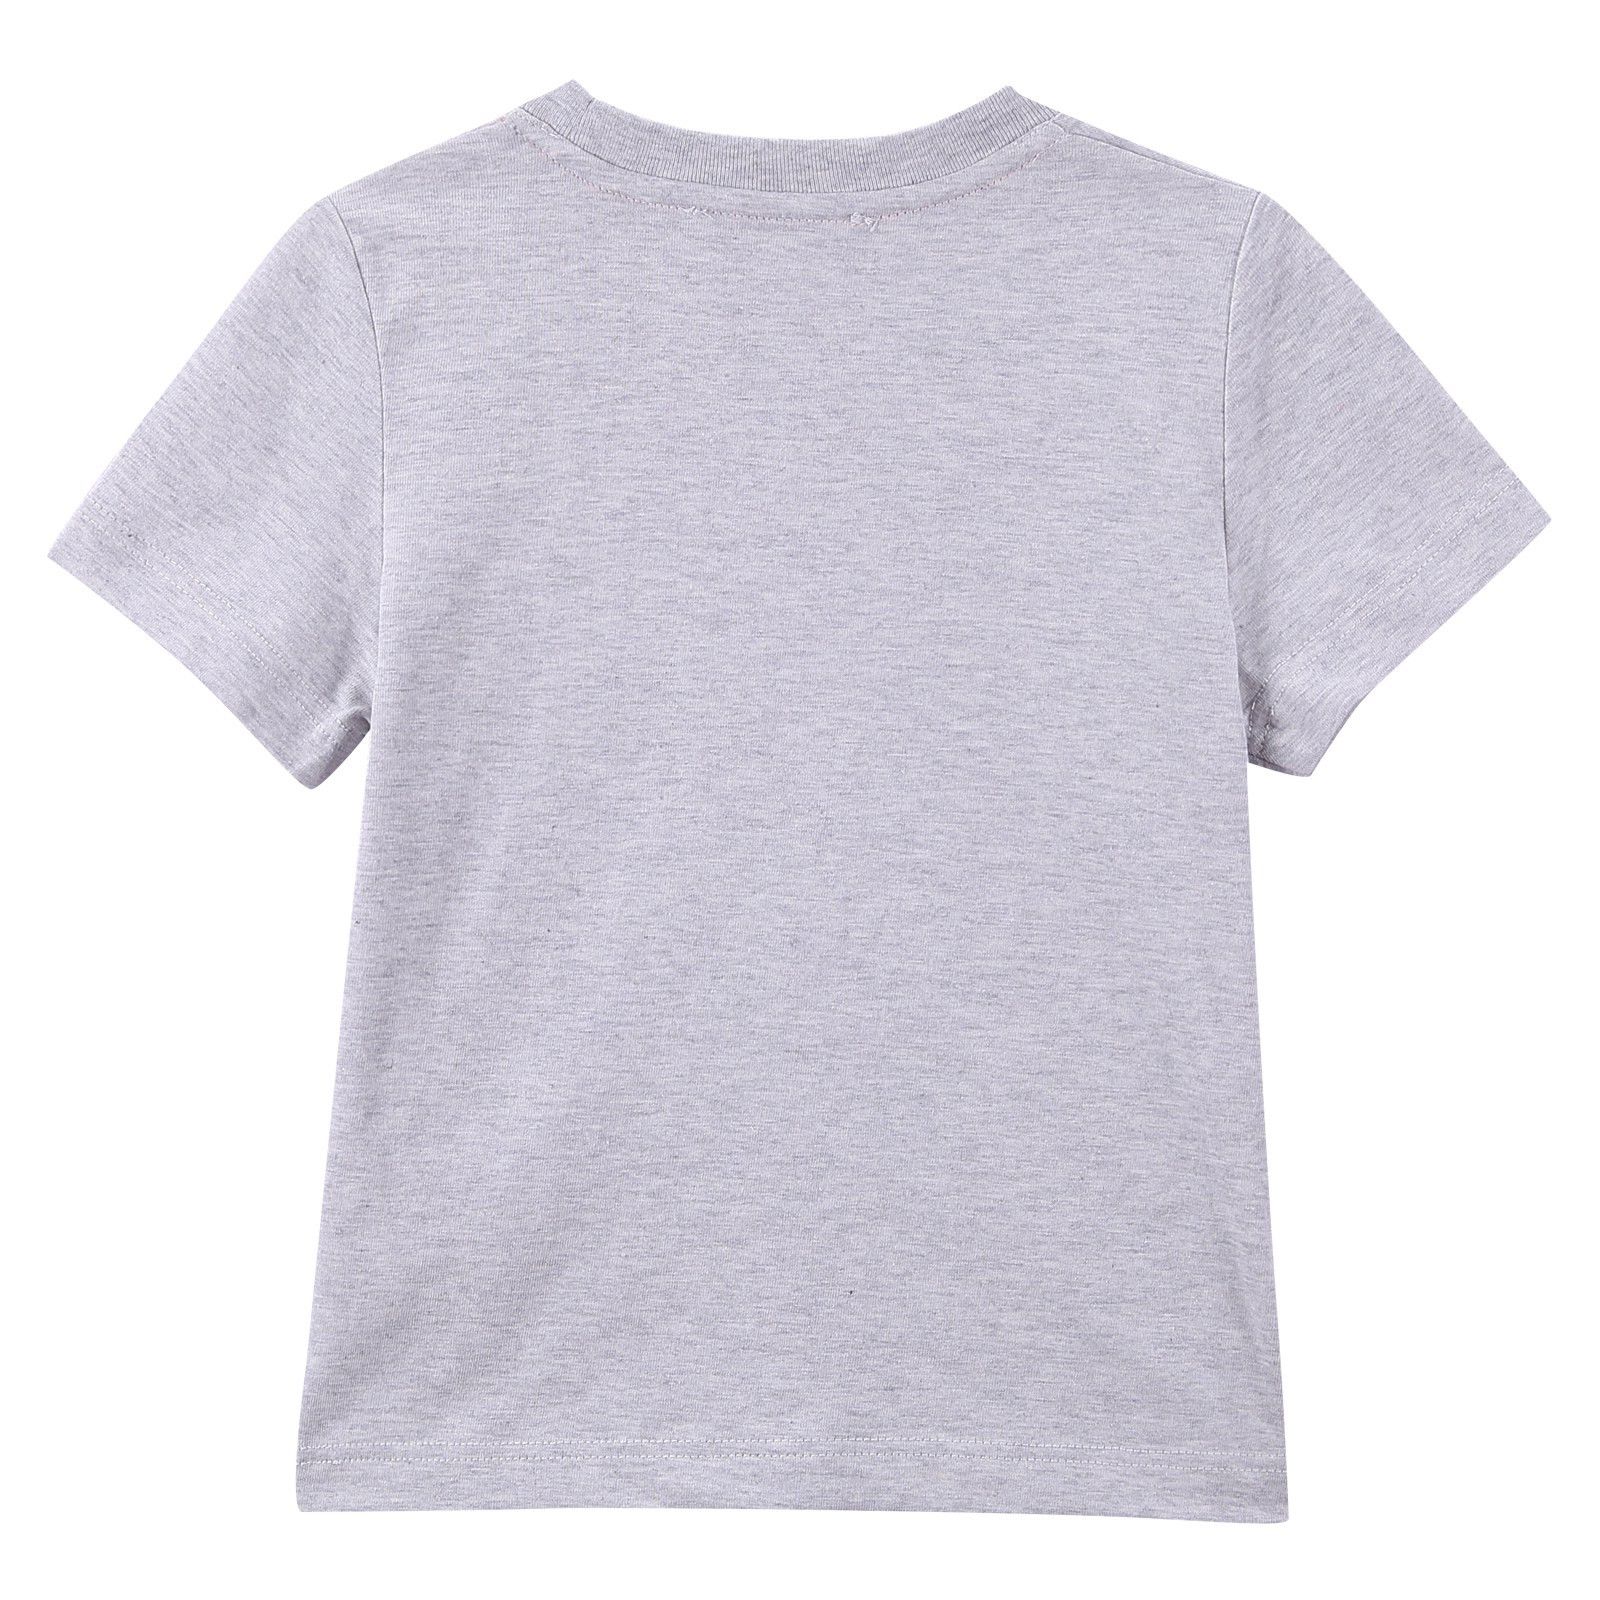 Boys Grey 'Mr Marc' Printed Cotton Jersey T-Shirt - CÉMAROSE | Children's Fashion Store - 2